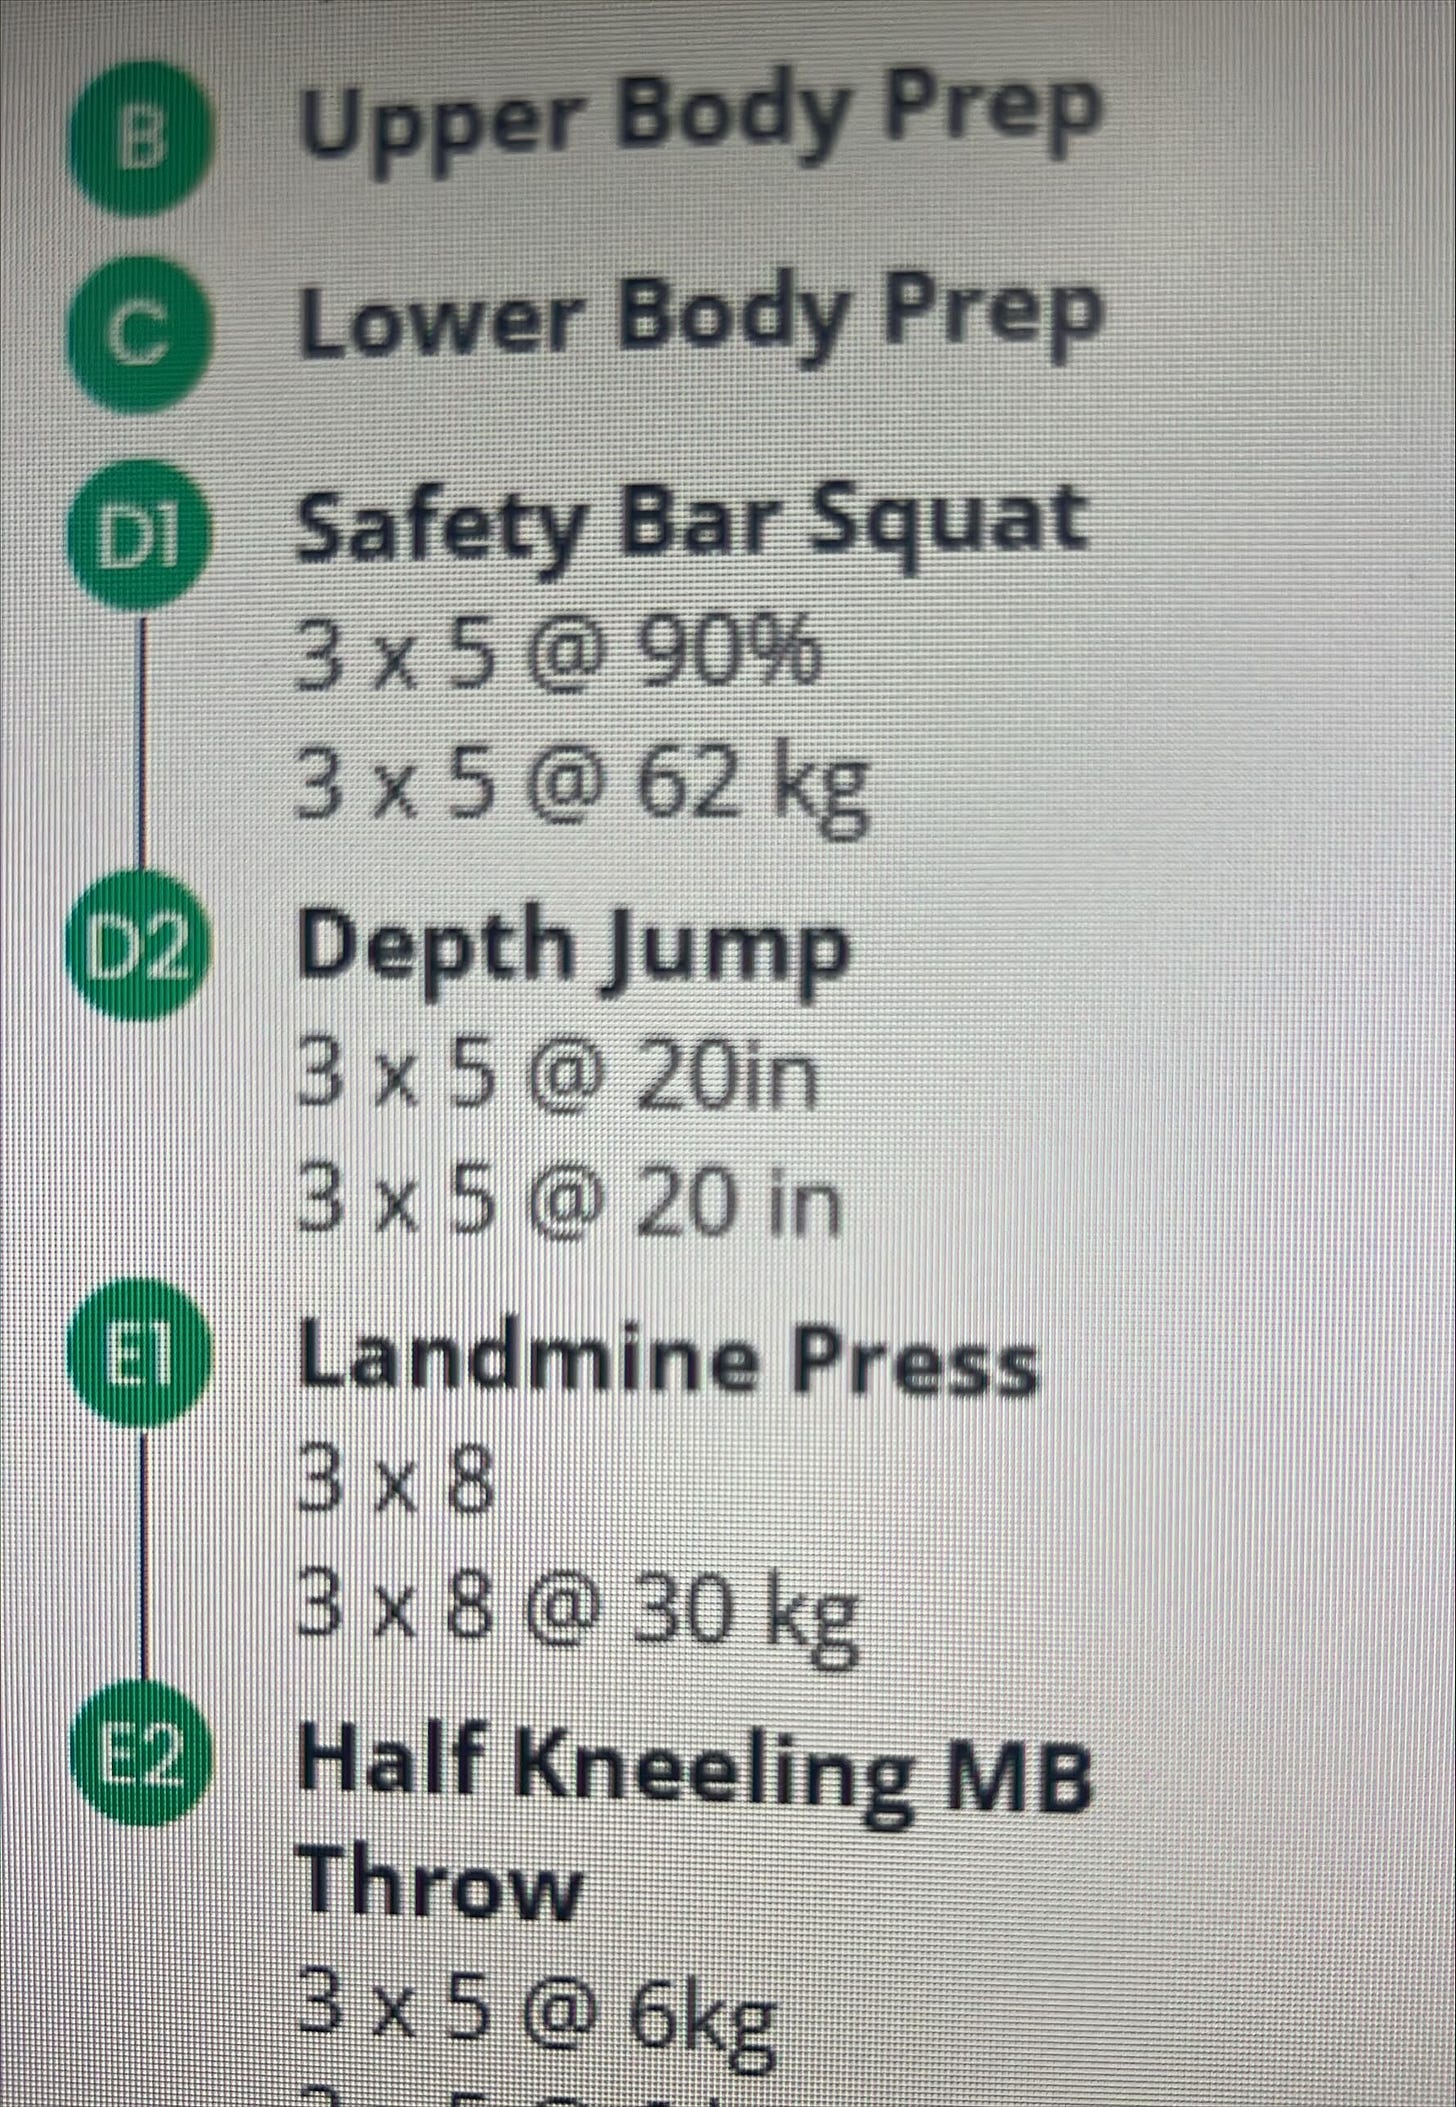 Upper Body Prep 
Lower Body Prep 
Safety Bar Squat 
3 x 5 @ 62 kg 
Depth Jump 
3 X 5 @20jn 
20 in 
ine Press 
30 kg 
knee0ngMB 
prow 
x 5 @ 6kg 